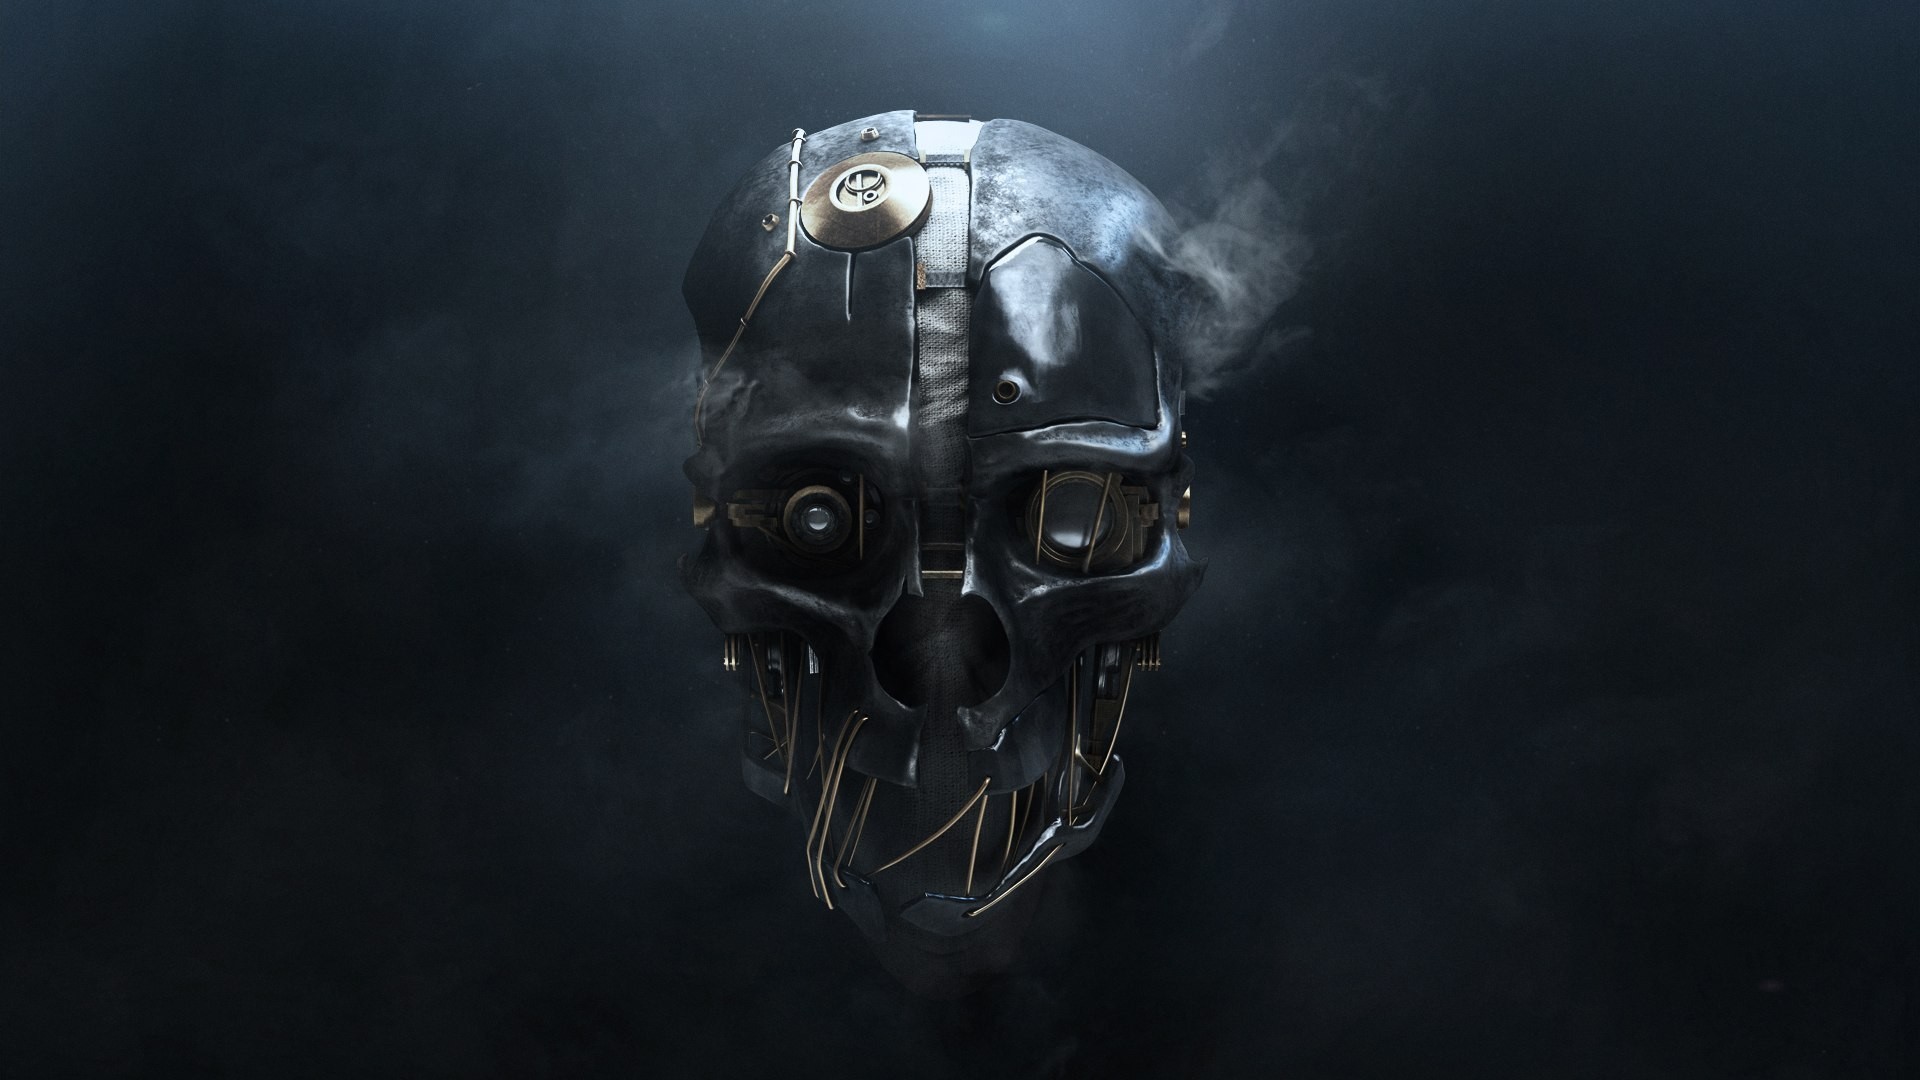 Skull Digital Art Simple Background 3D Metal Wires Smoke Technology Dishonored Video Games Corvo Att 1920x1080